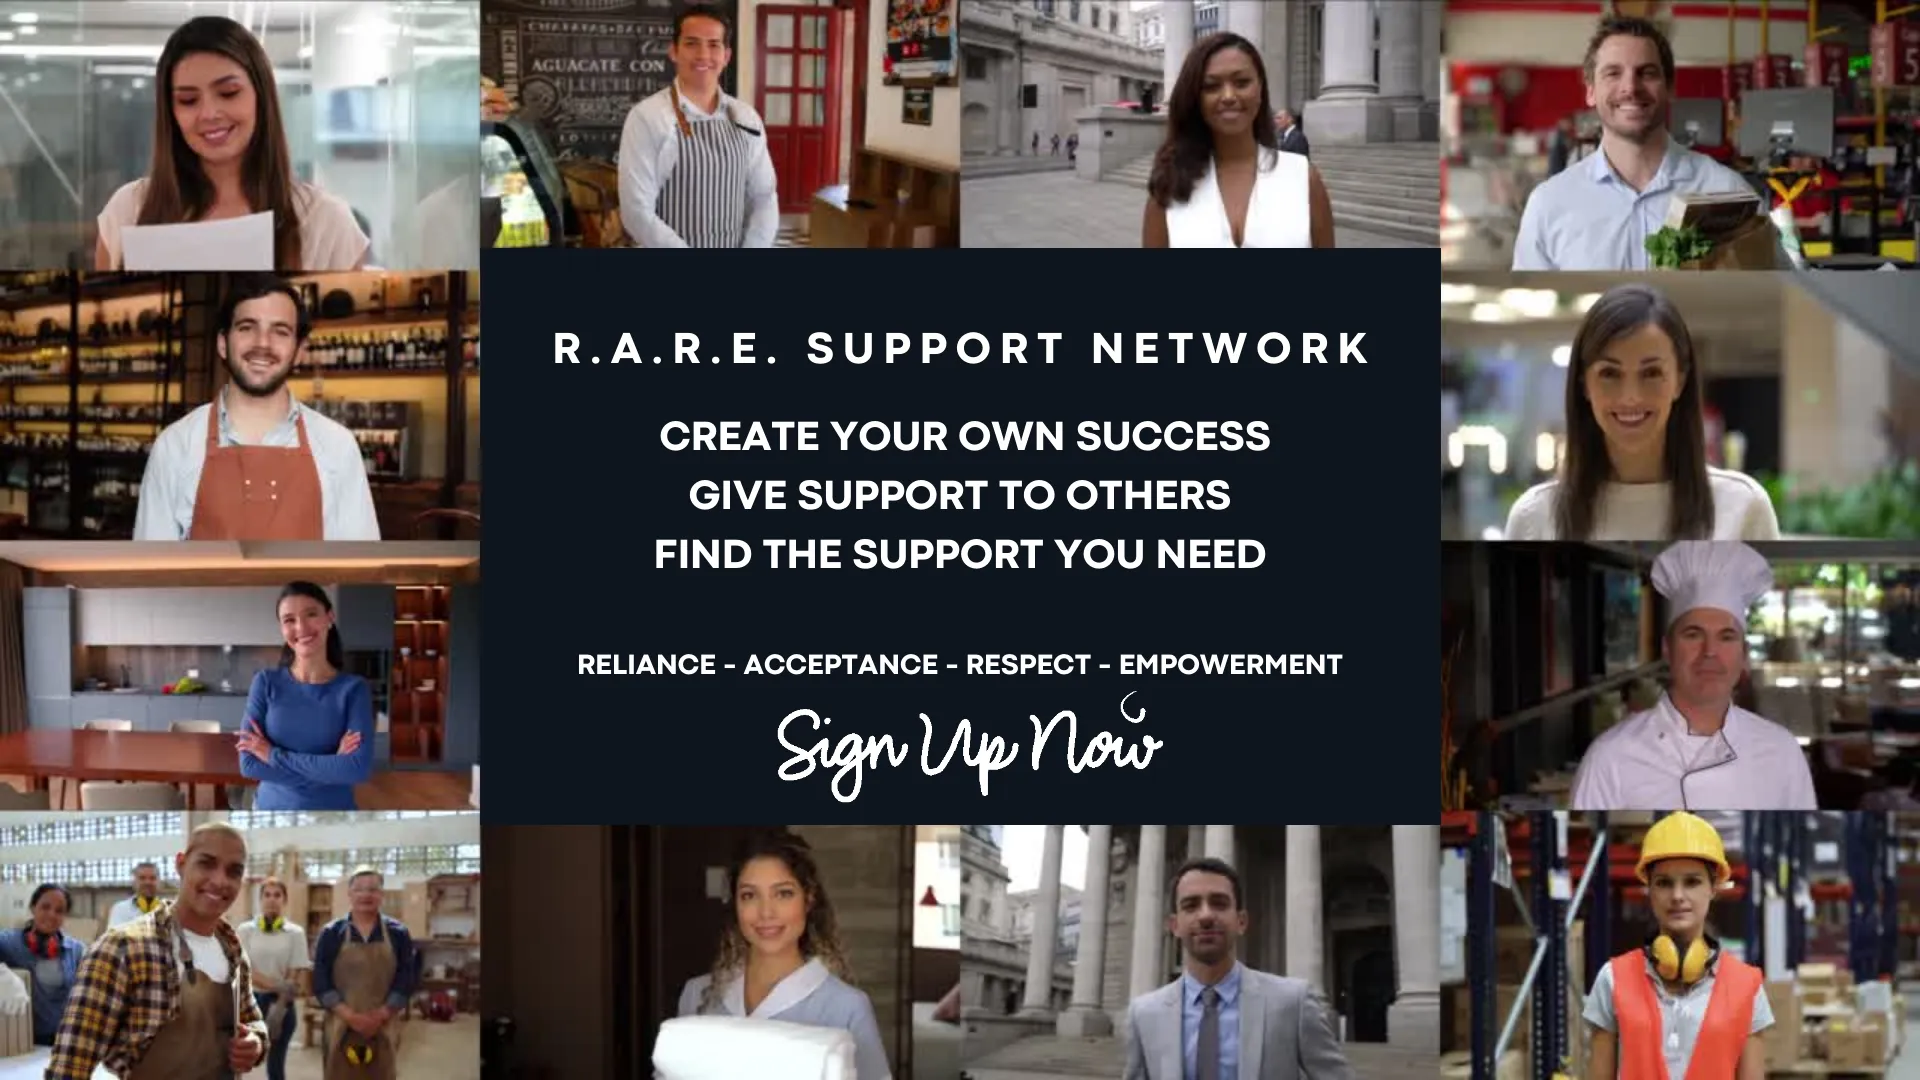 R.A.R.E. Support Network